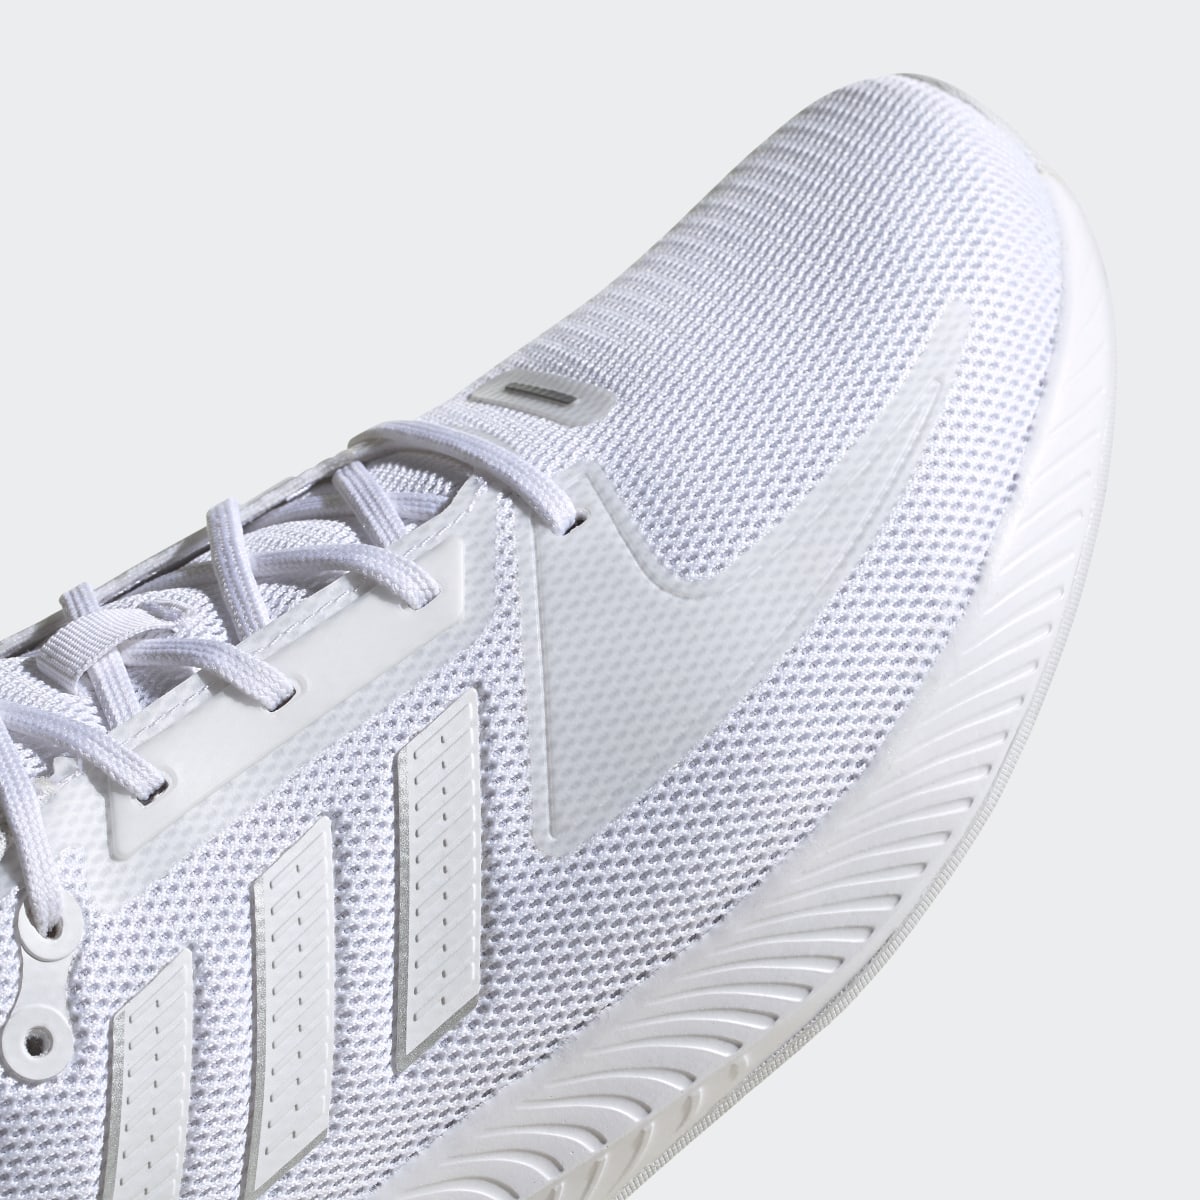 Adidas Run Falcon 2.0 Ayakkabı. 8